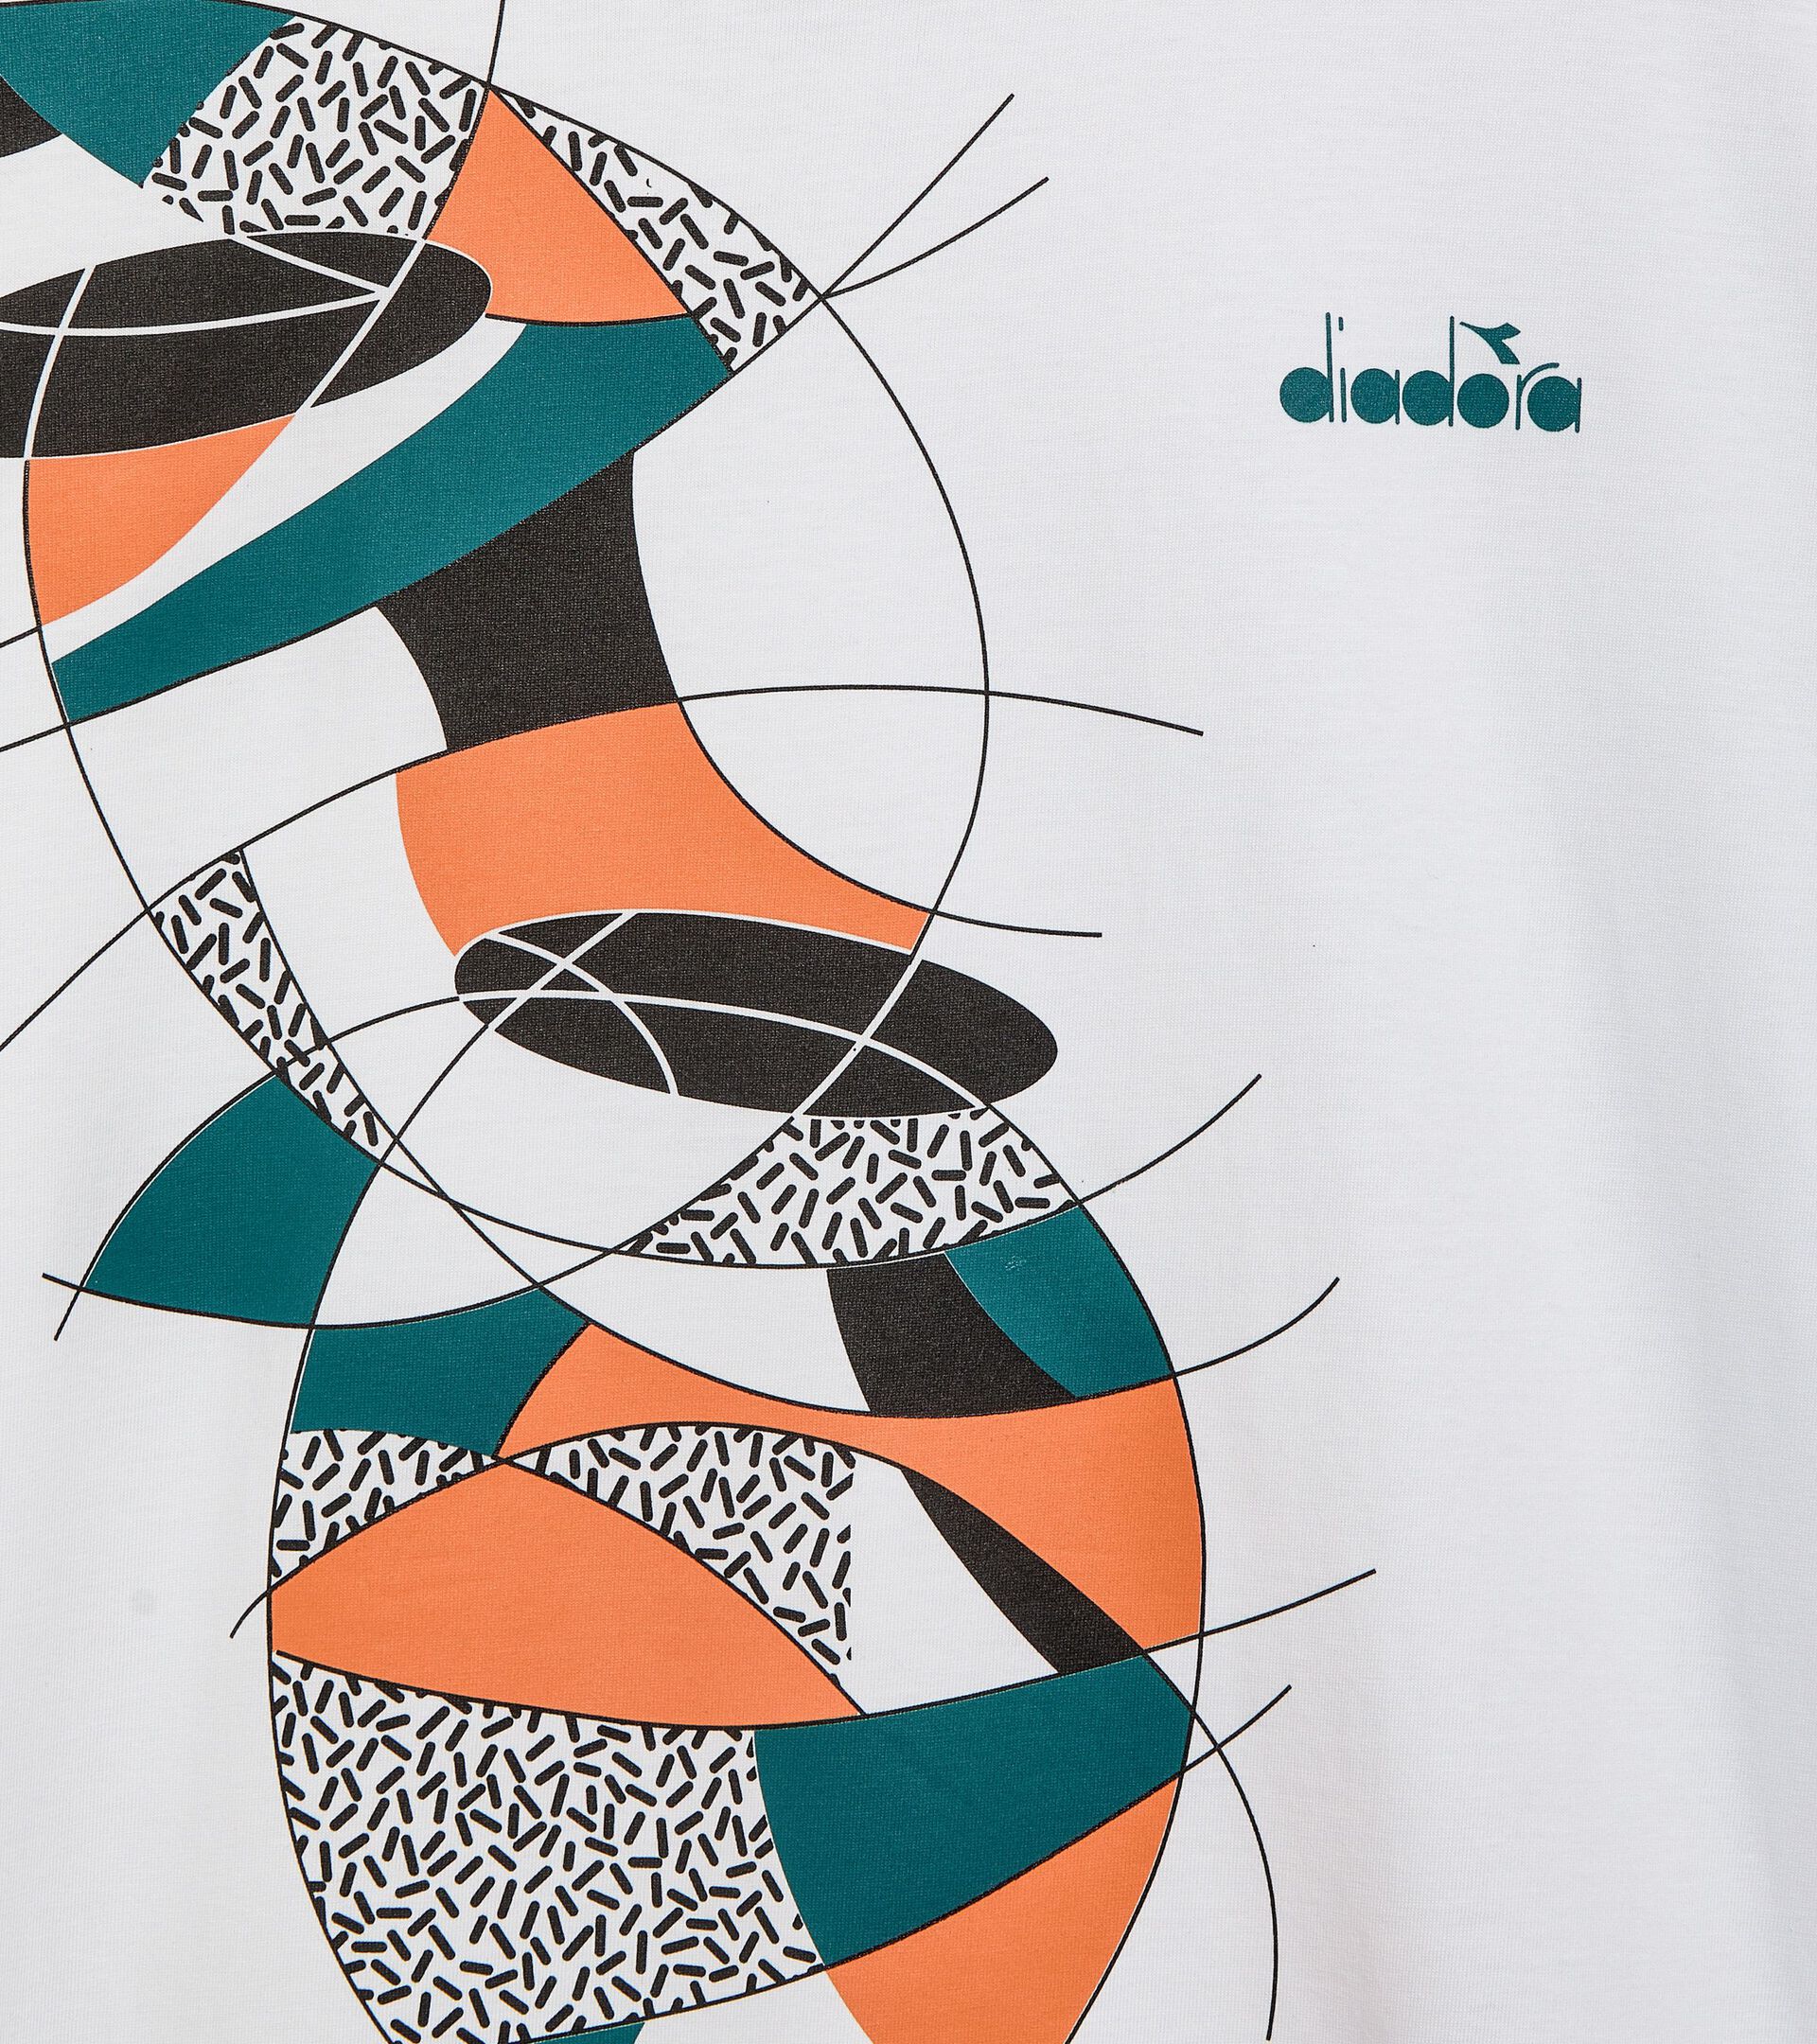 Camiseta deportiva estilo años 90 - Made in Italy - Hombre T-SHIRT SS TENNIS 90 NEGRO - Diadora